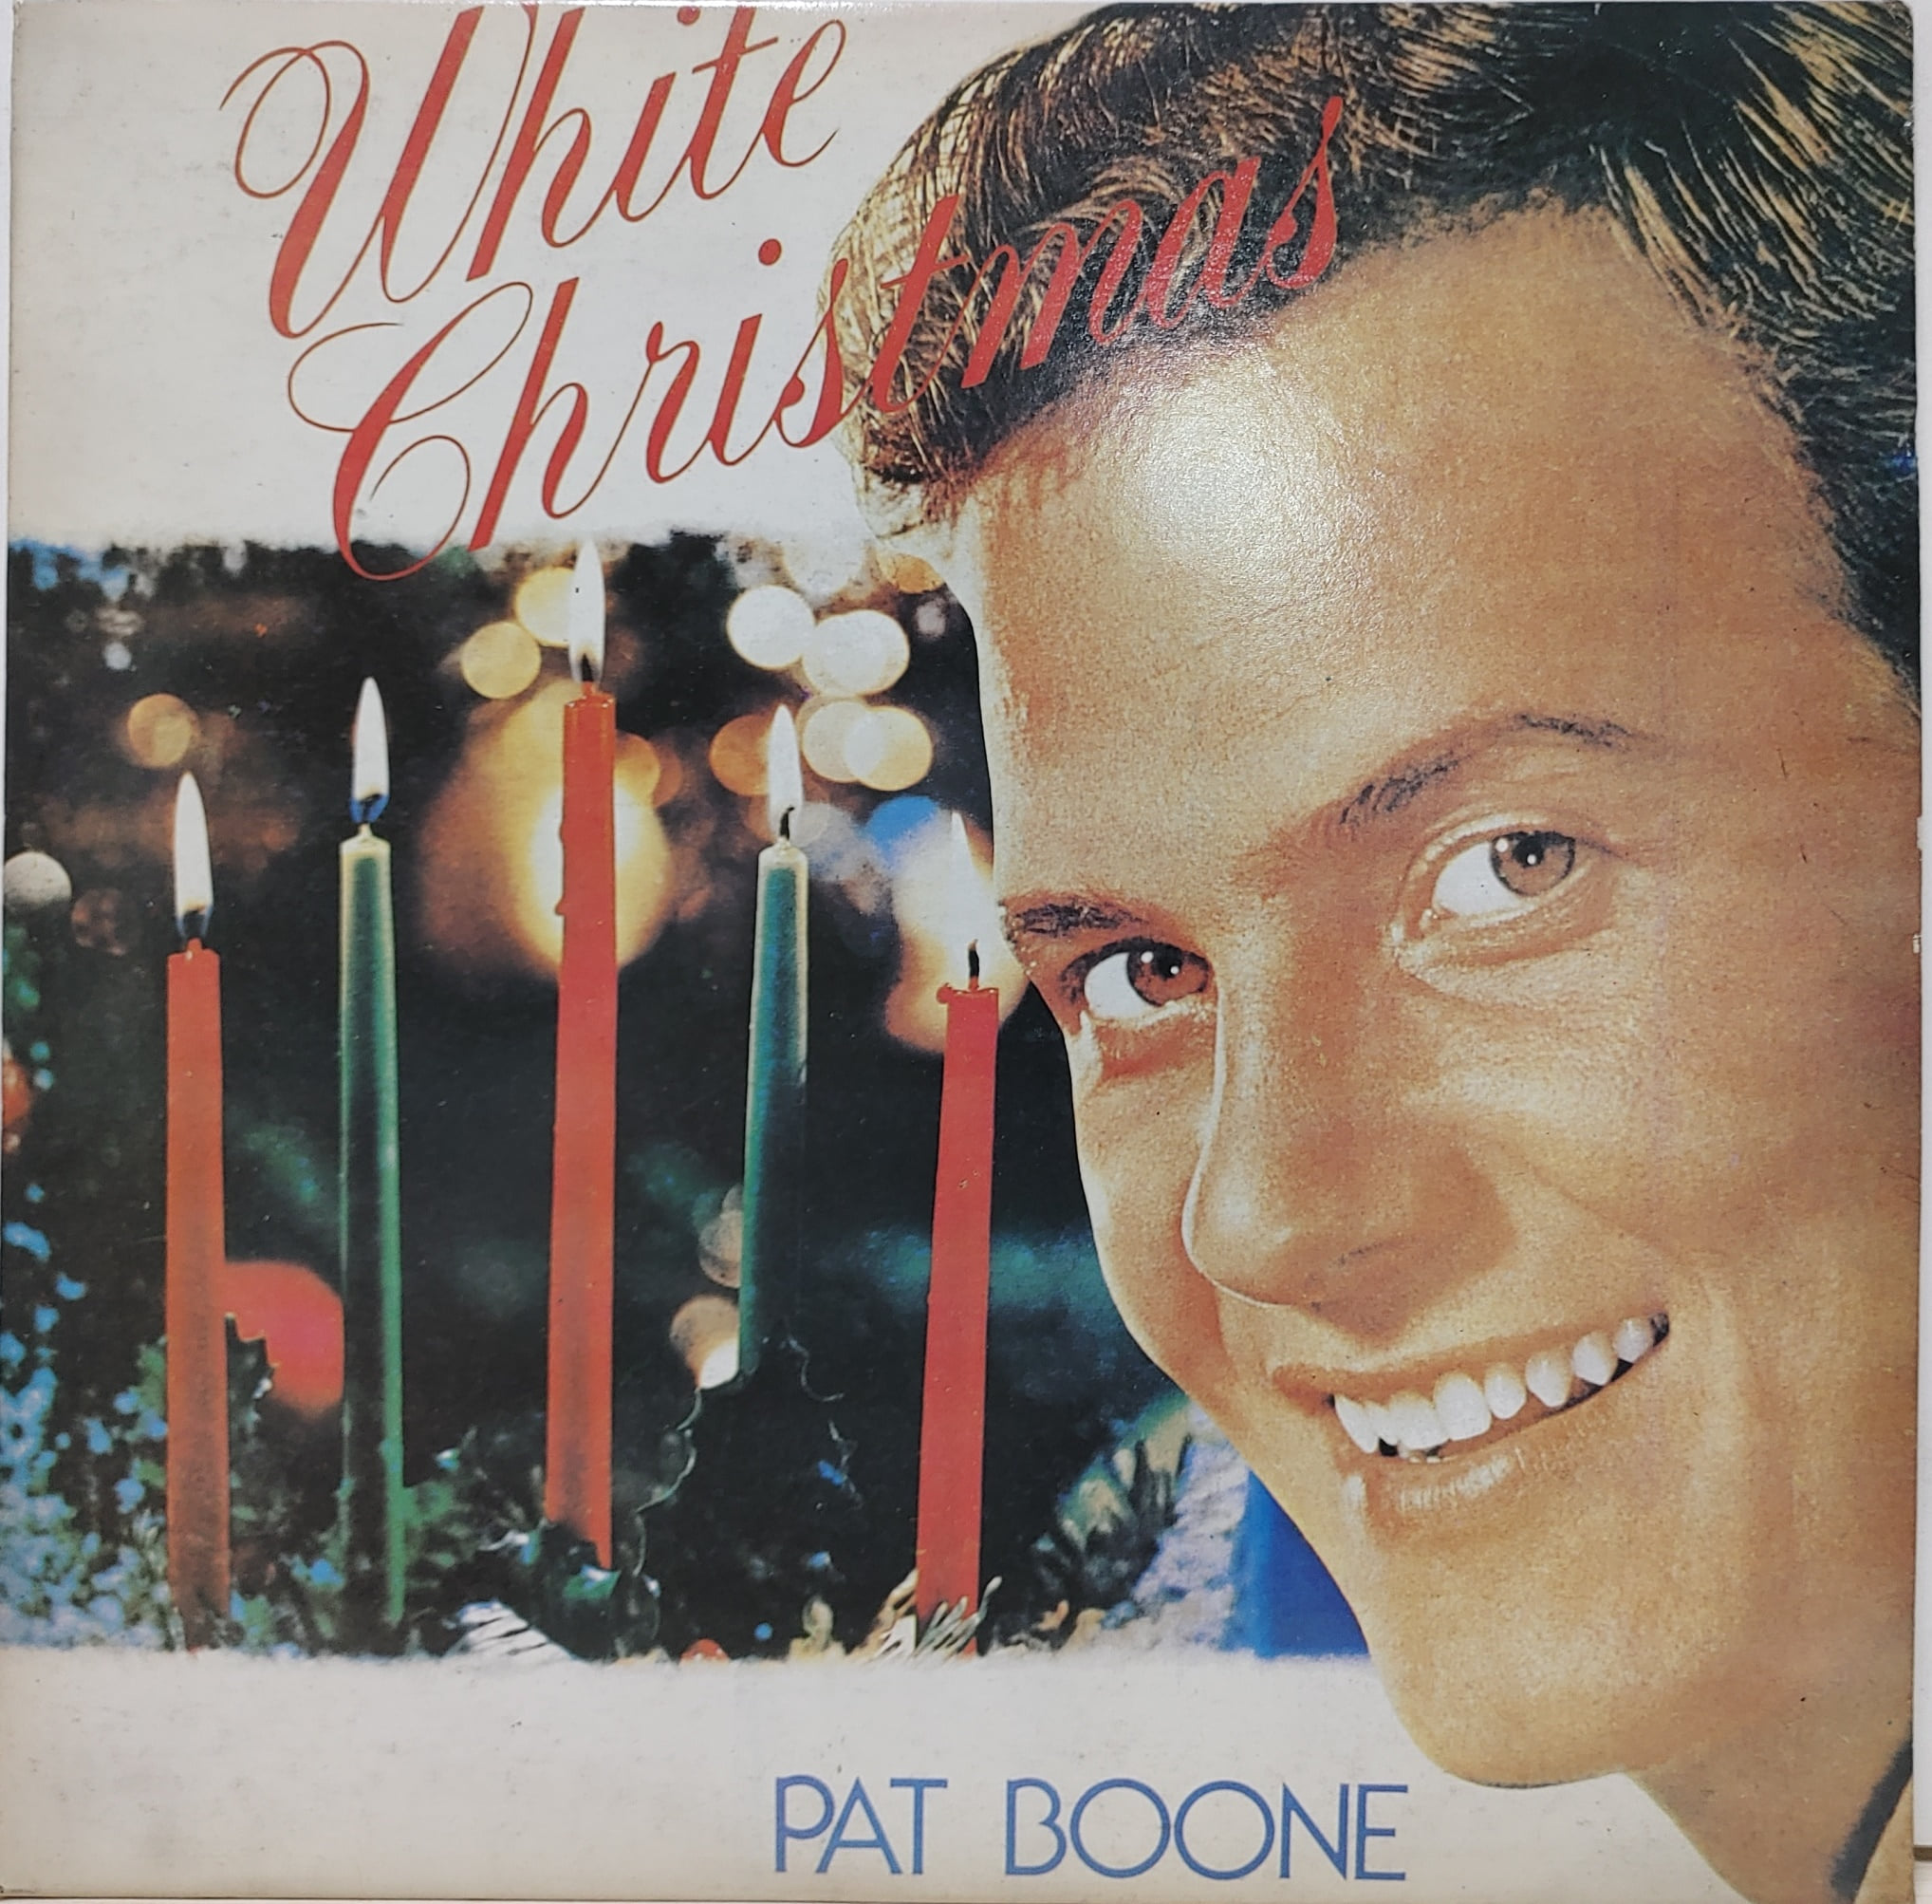 PAT BOONE / WHITE CHRISTMAS